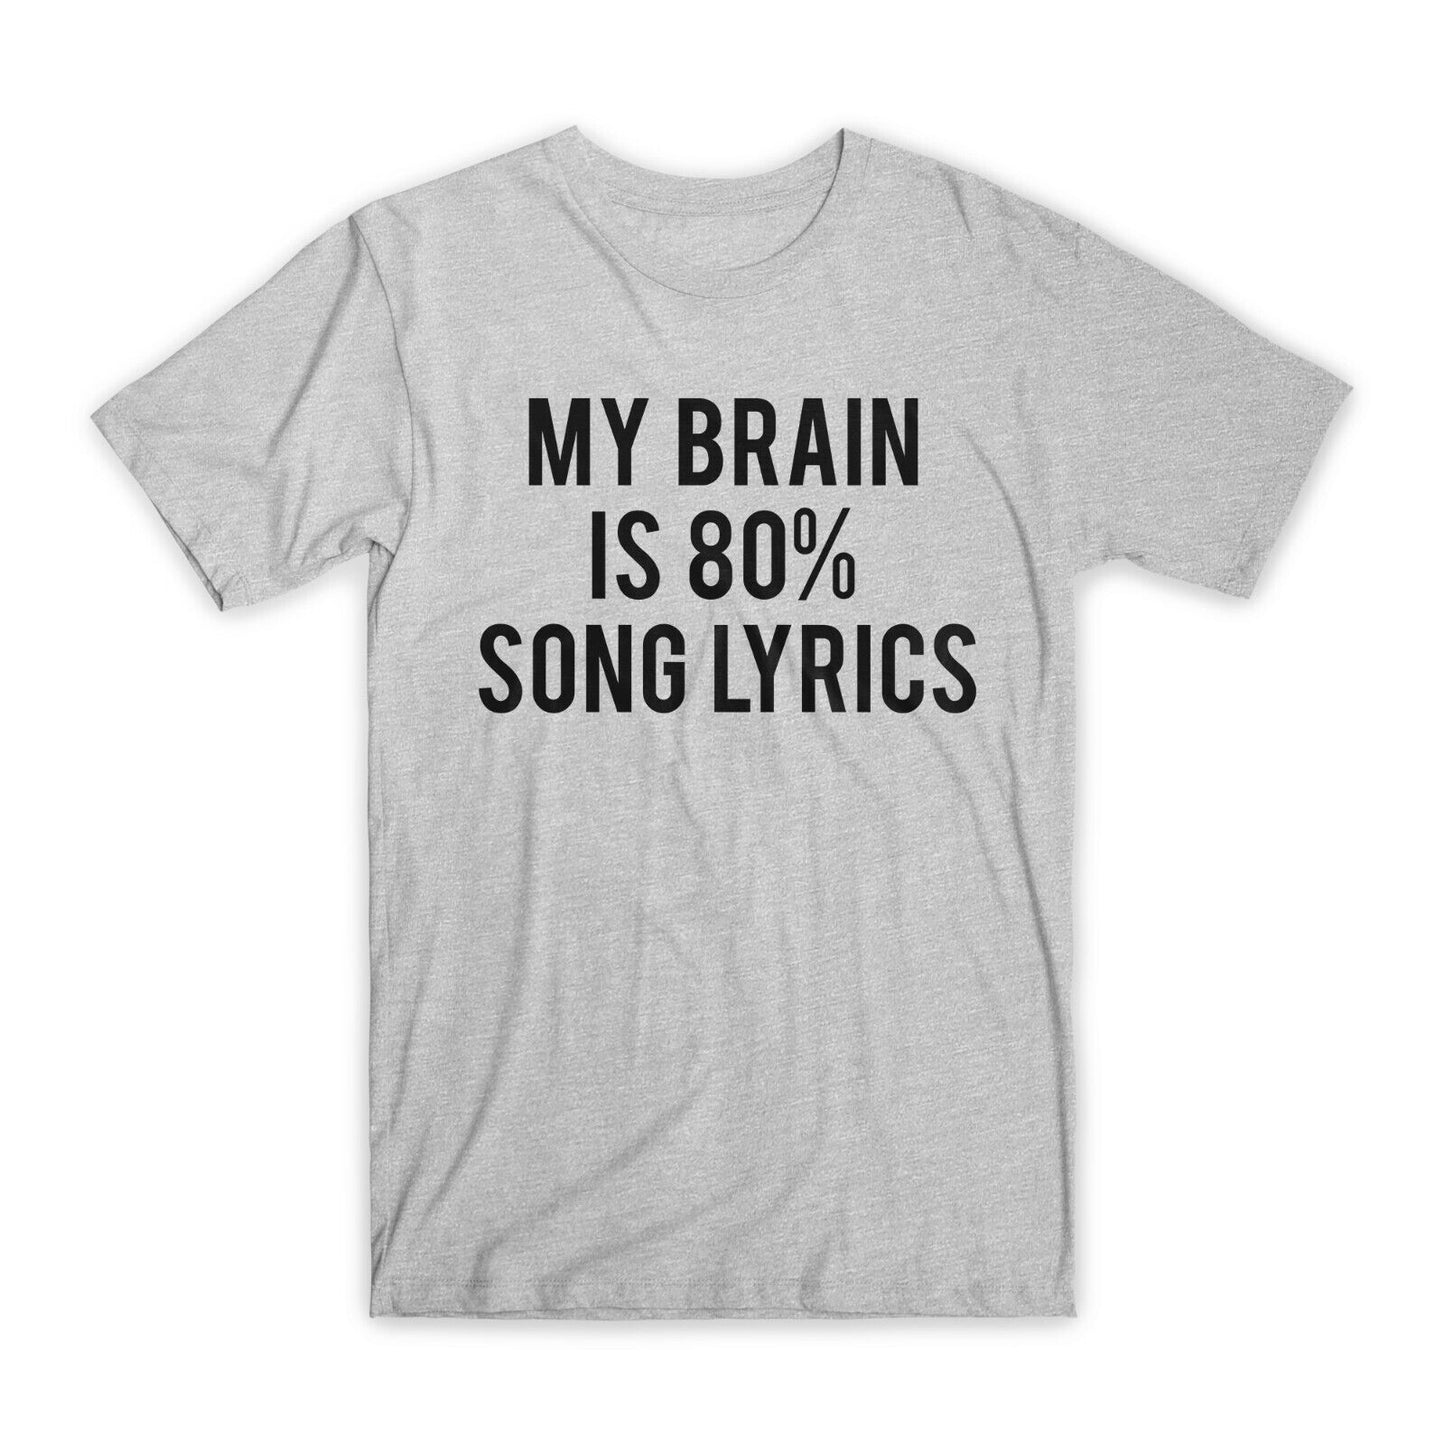 My Brain is 80% Song Lyrics T-Shirt Premium Cotton Crew Neck Funny Tees Gift NEW